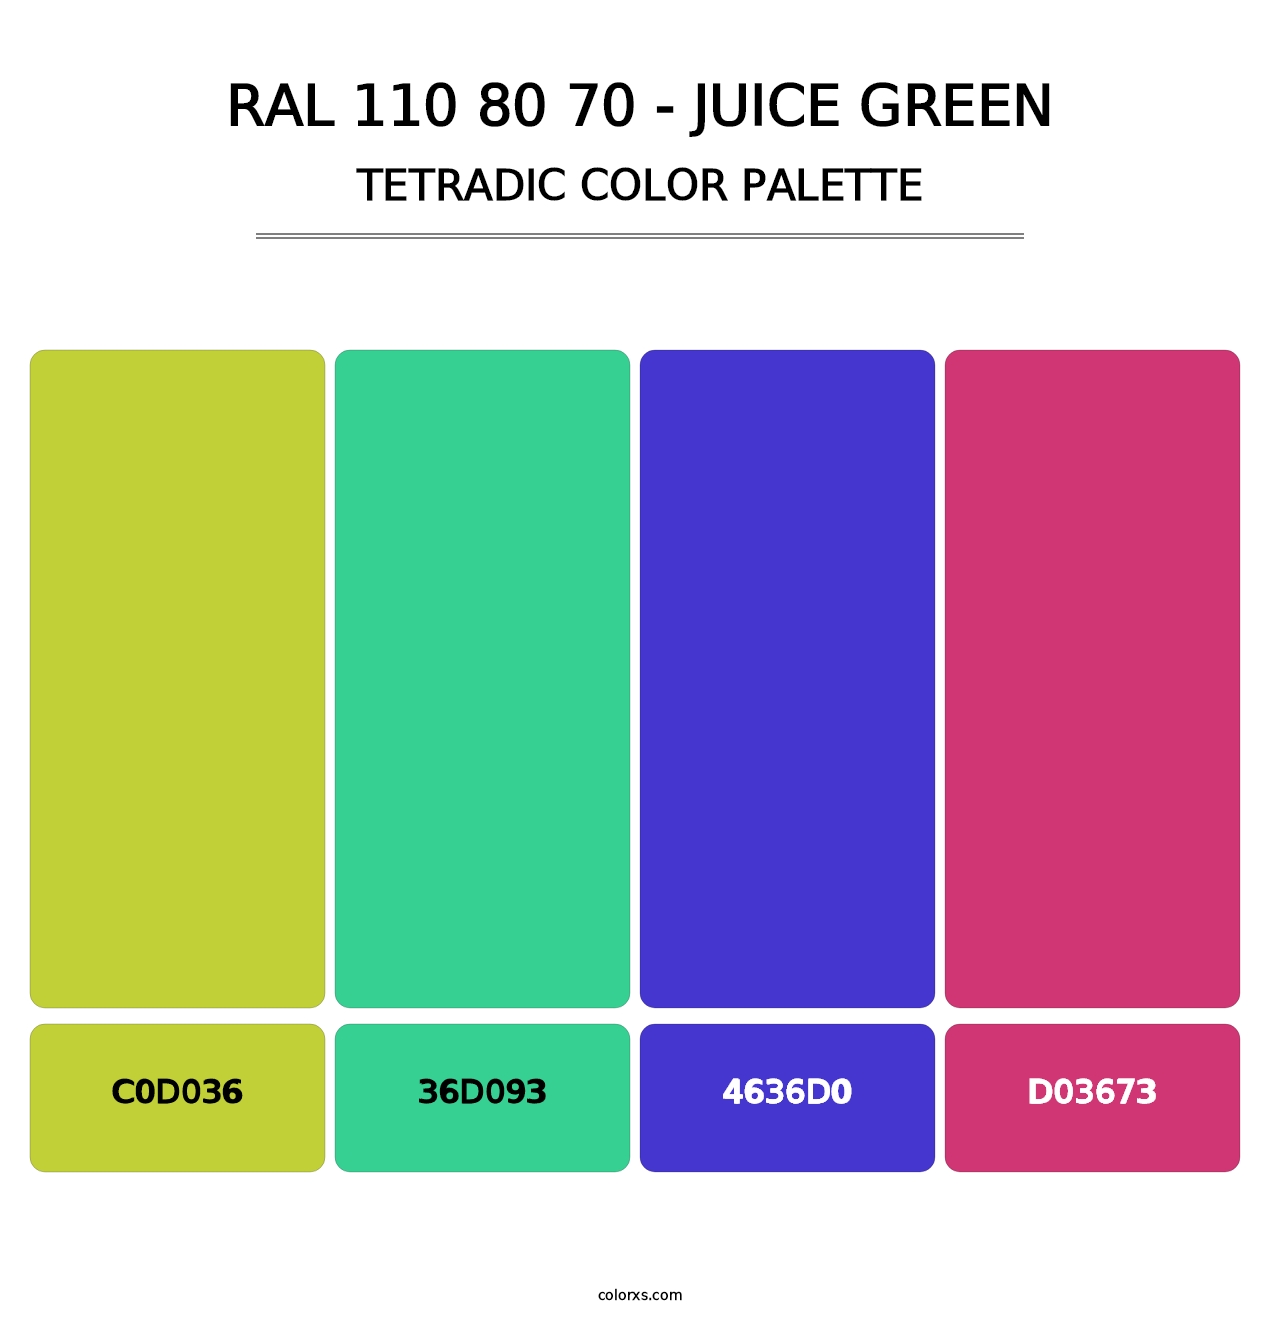 RAL 110 80 70 - Juice Green - Tetradic Color Palette